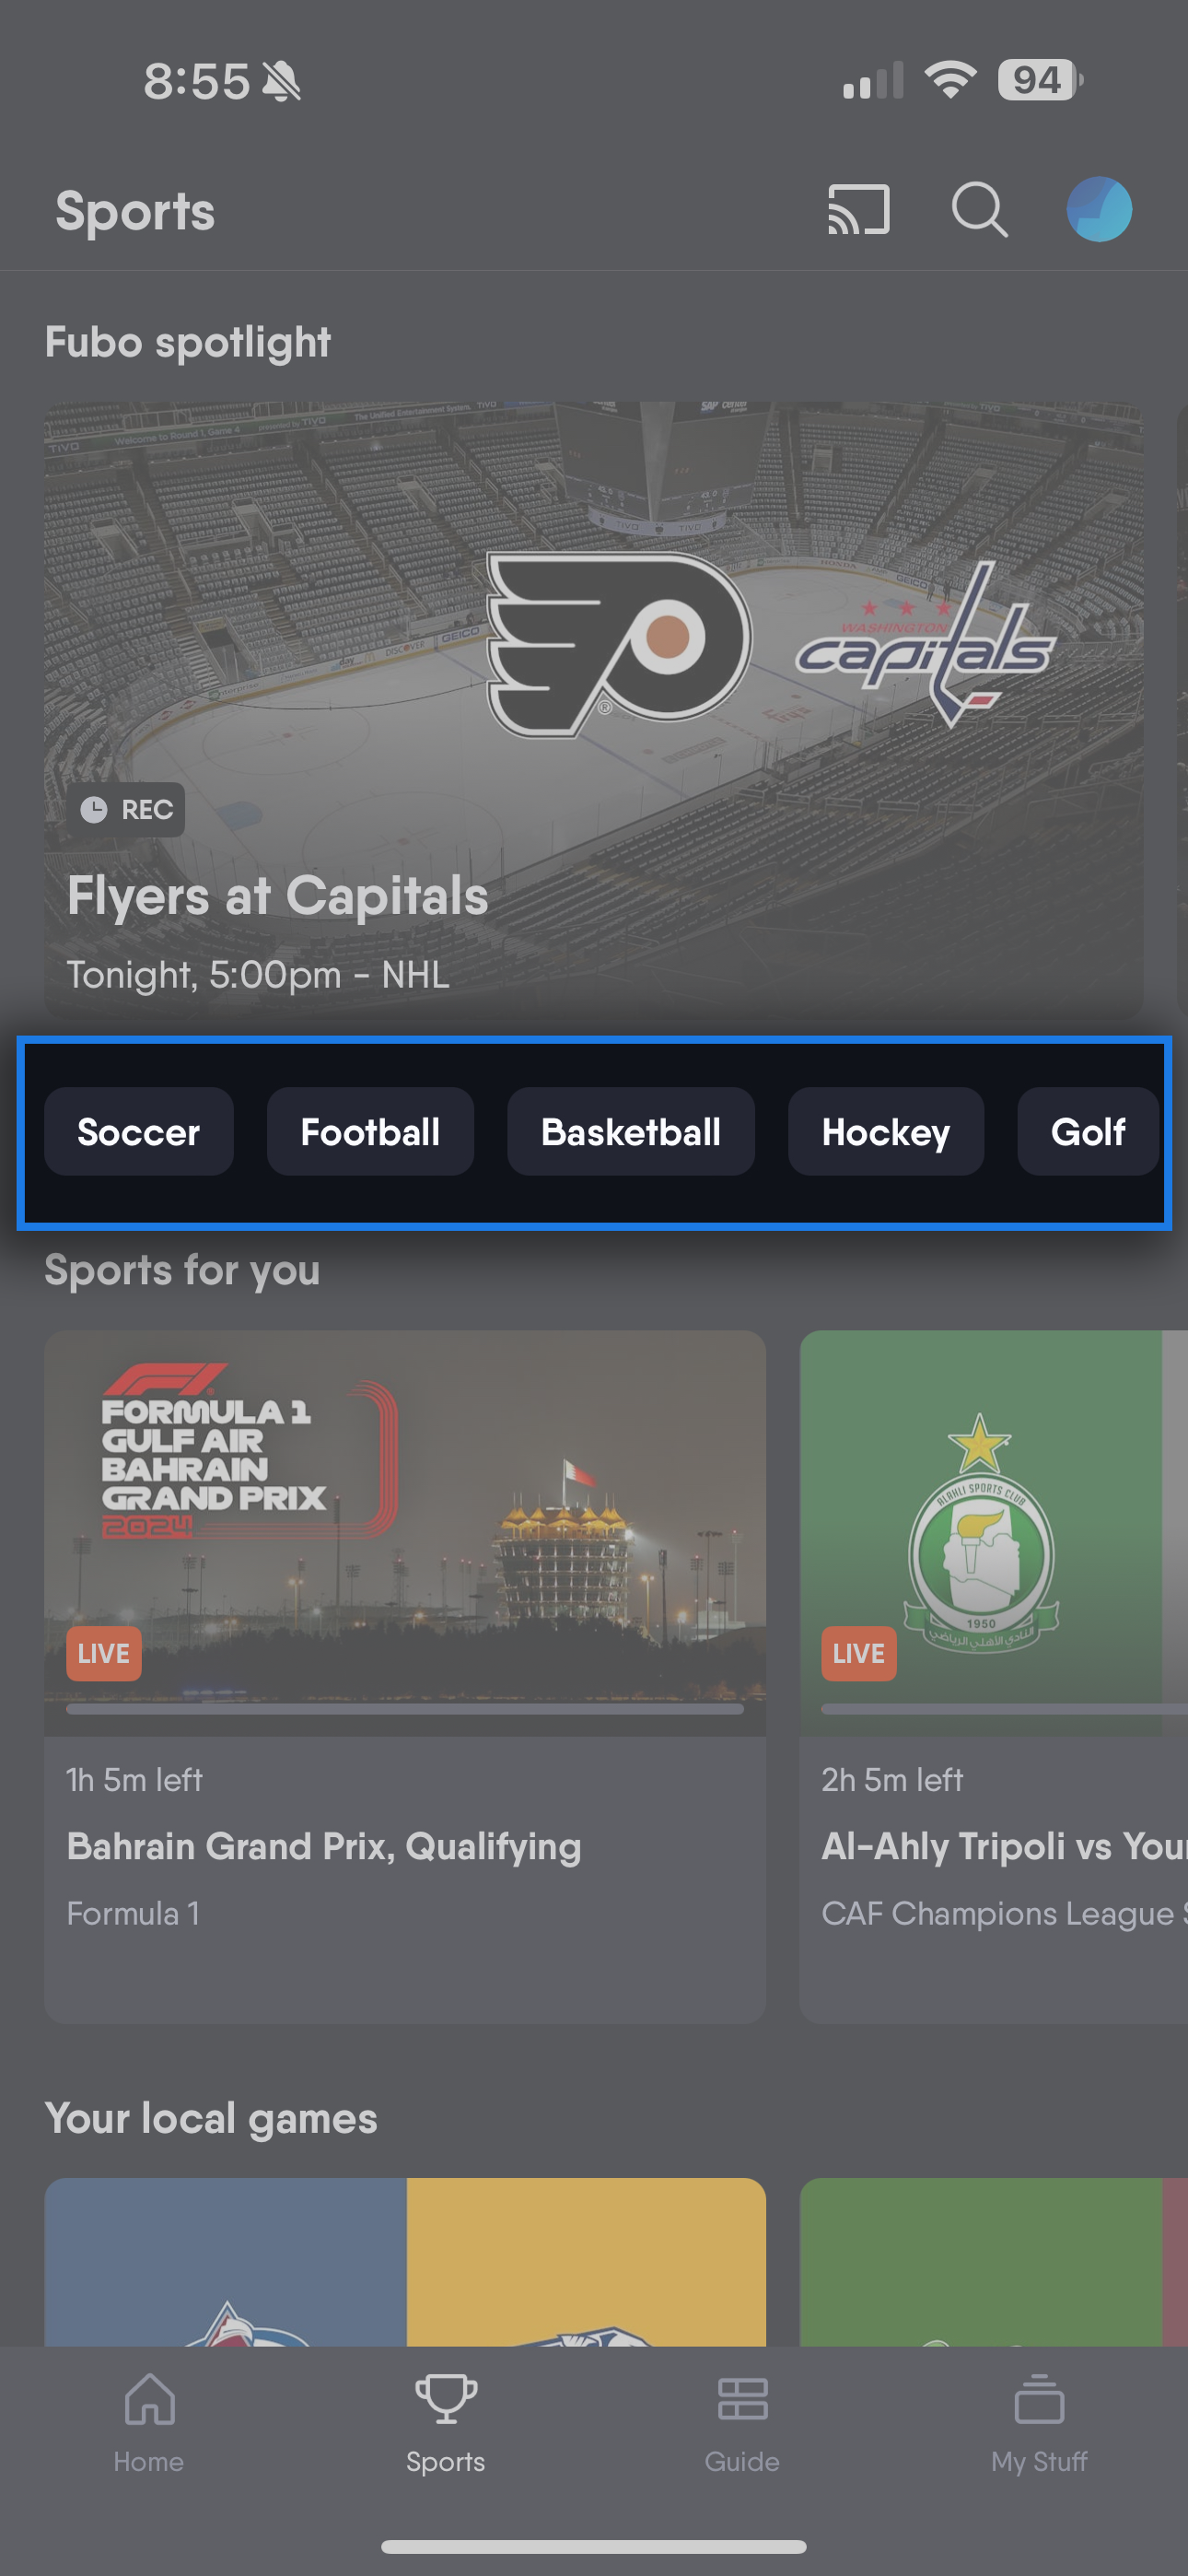 Sports main screen of the Fubo app on iOS